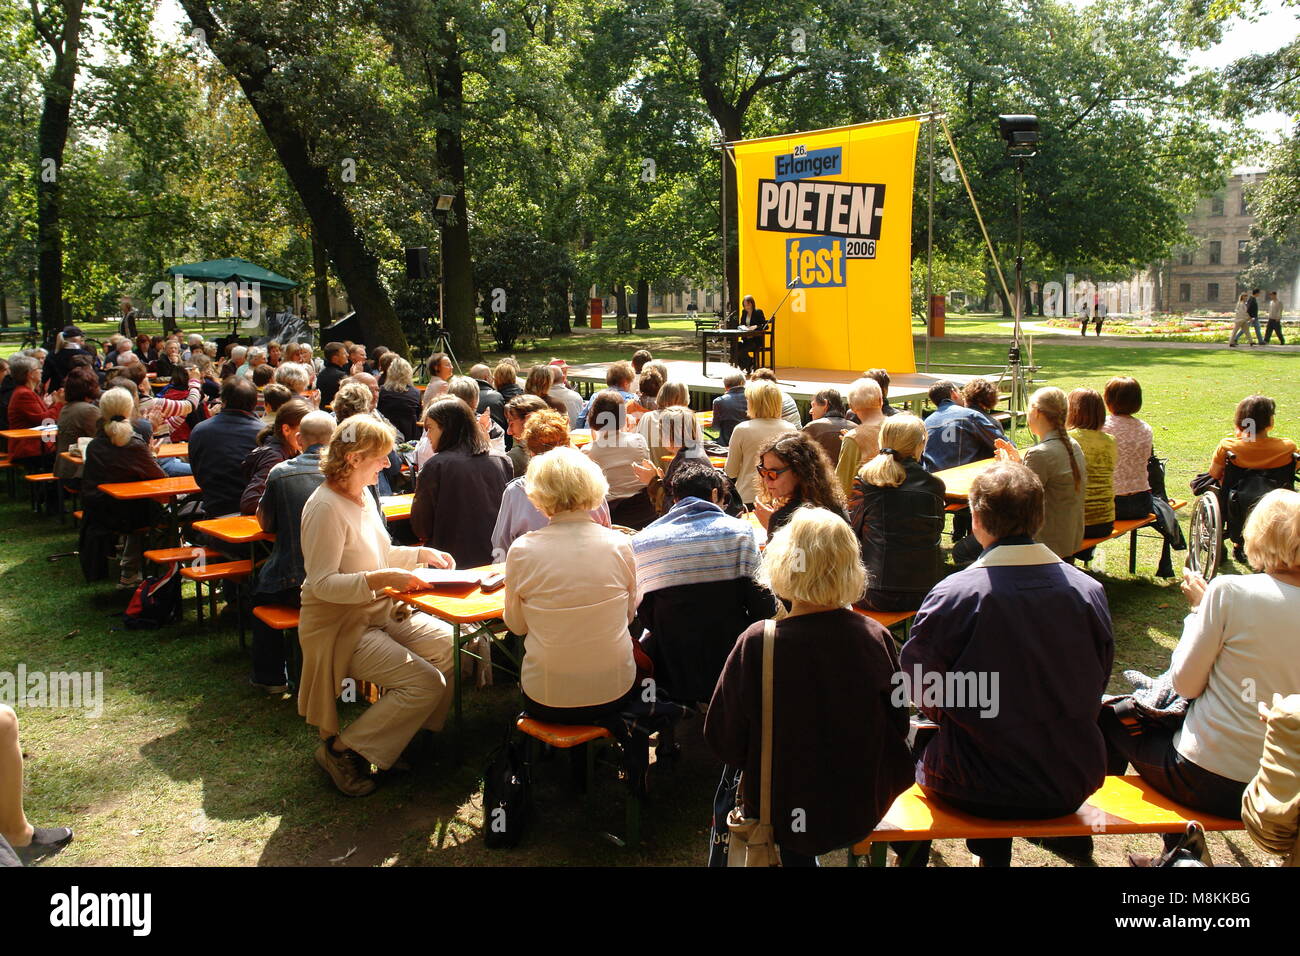 Public Poetry Reading in Erlangen, Germany, at Poetenfest 2006 Stock Photo